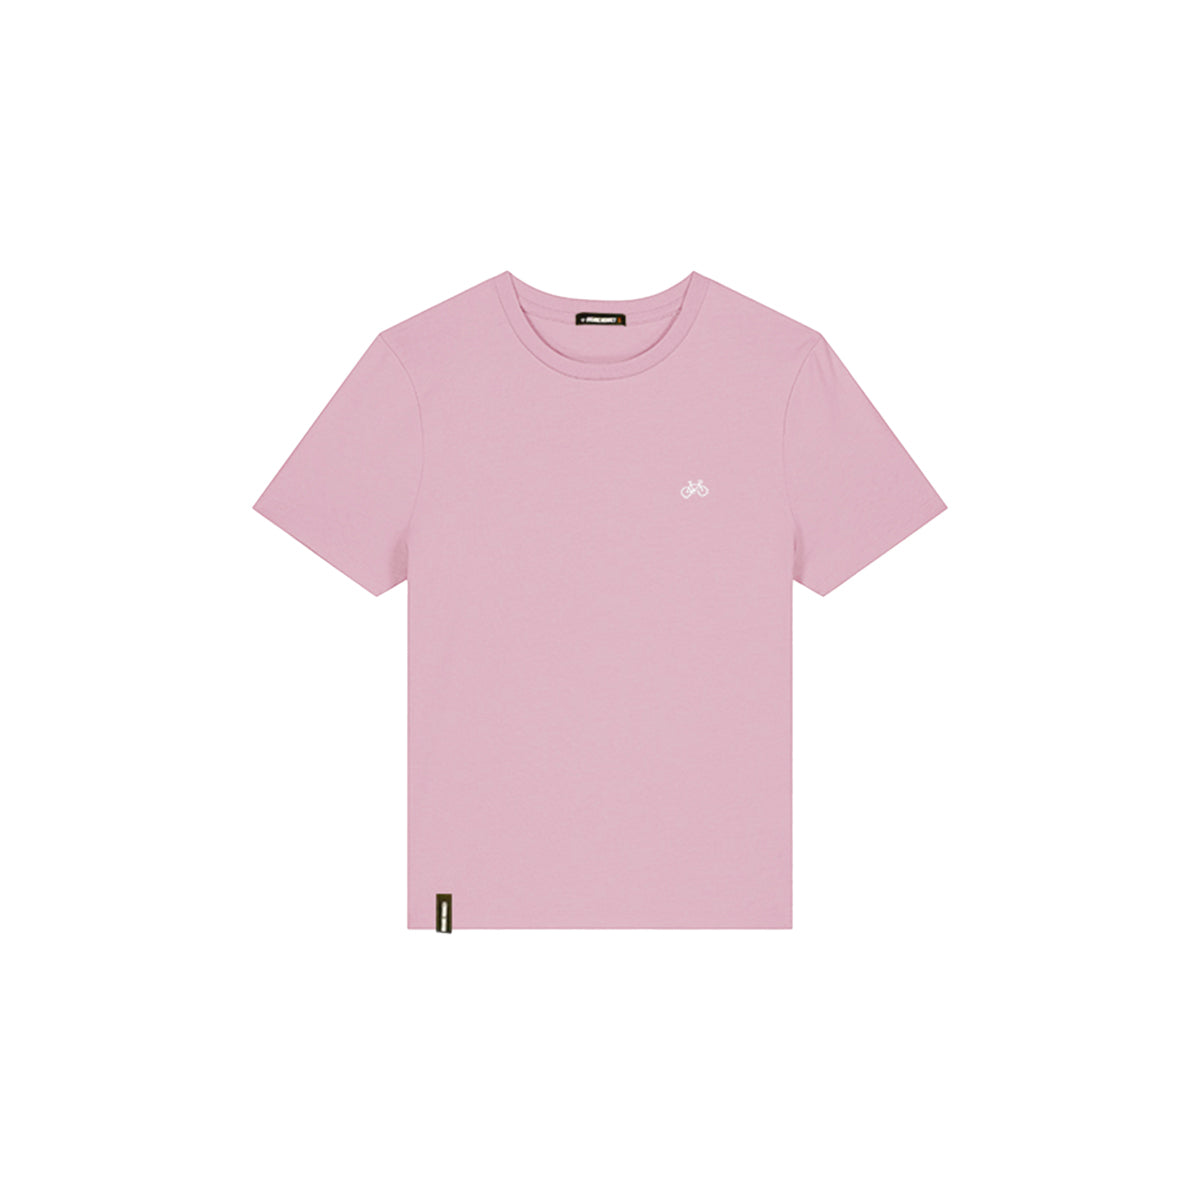 Dutch Car | Woman T-shirt | Pink